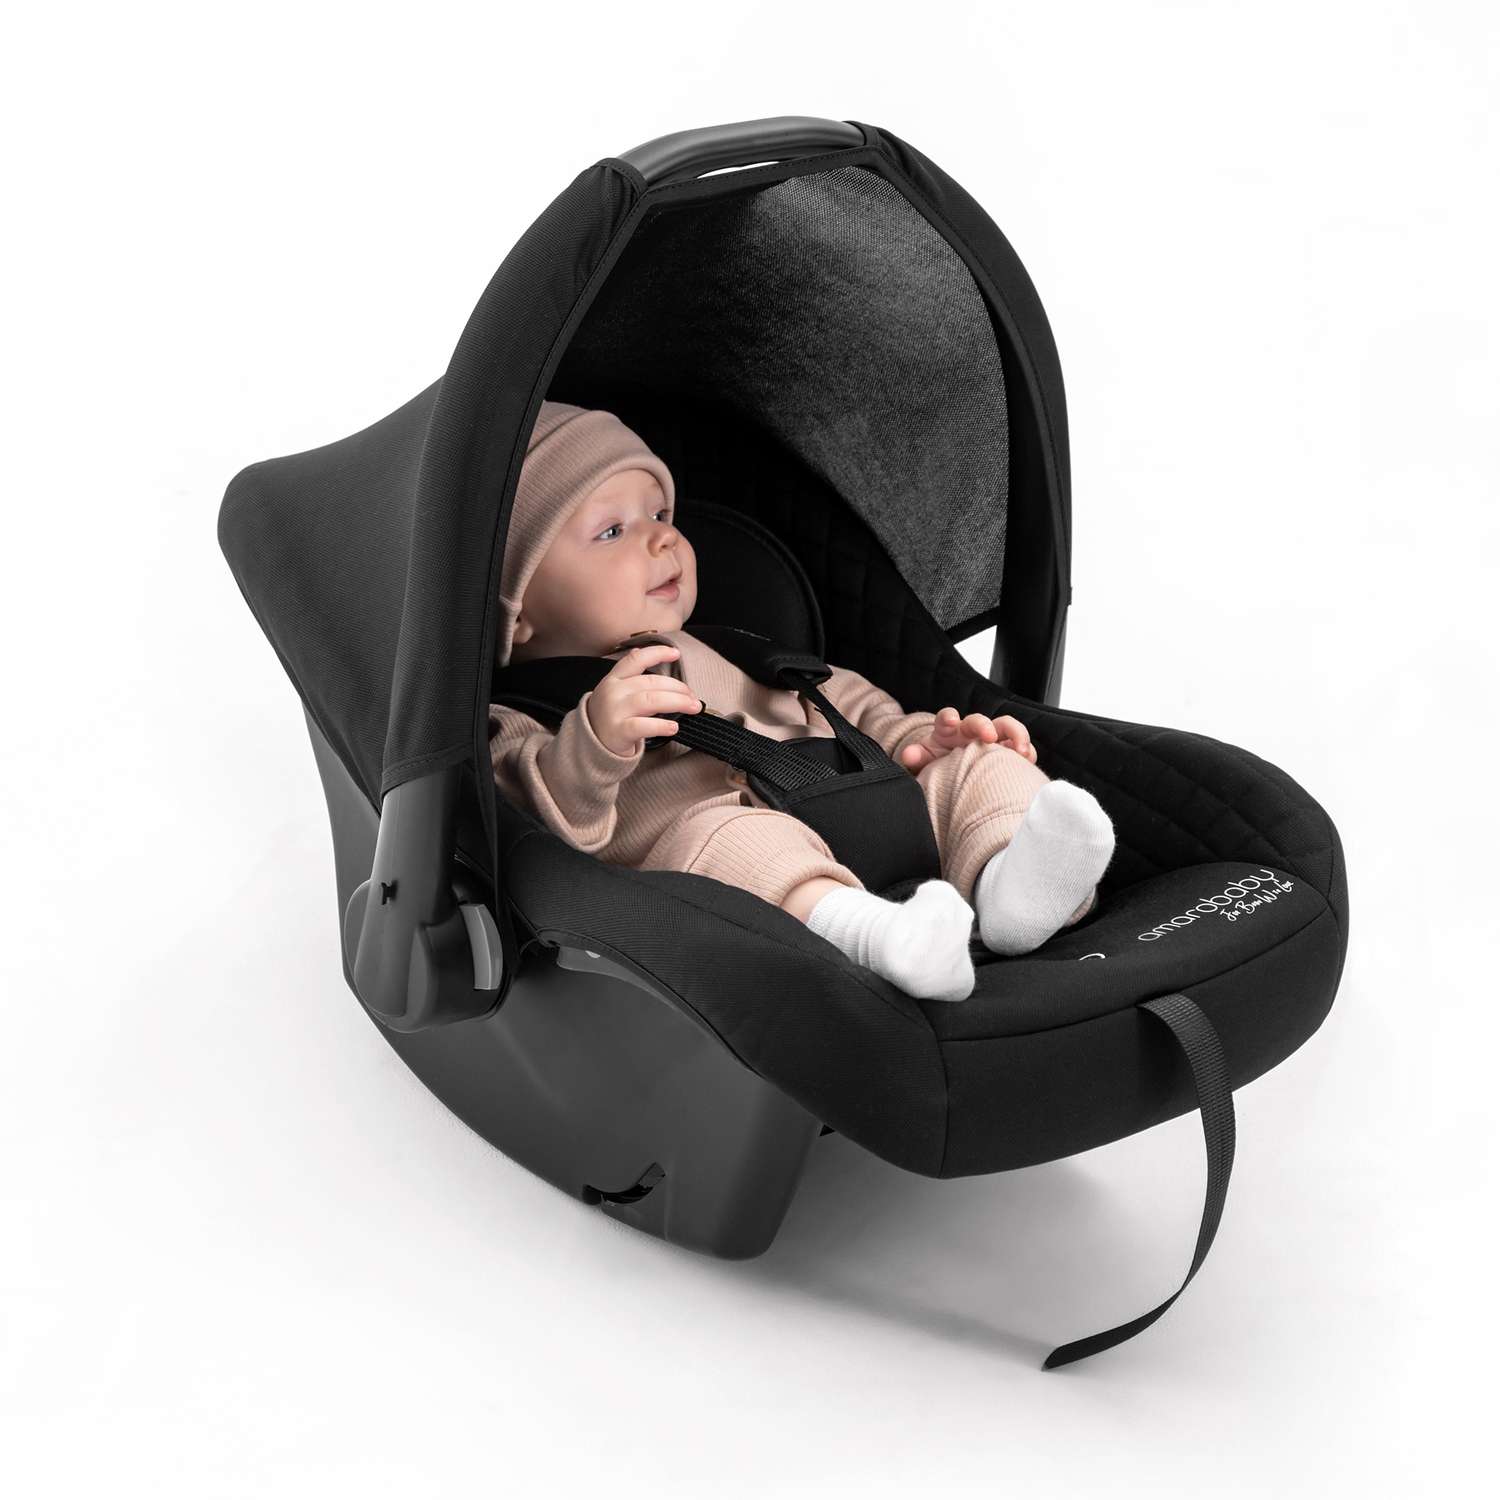 Автокресло детское AmaroBaby Baby comfort группа 0+ светло-бежевый - фото 10